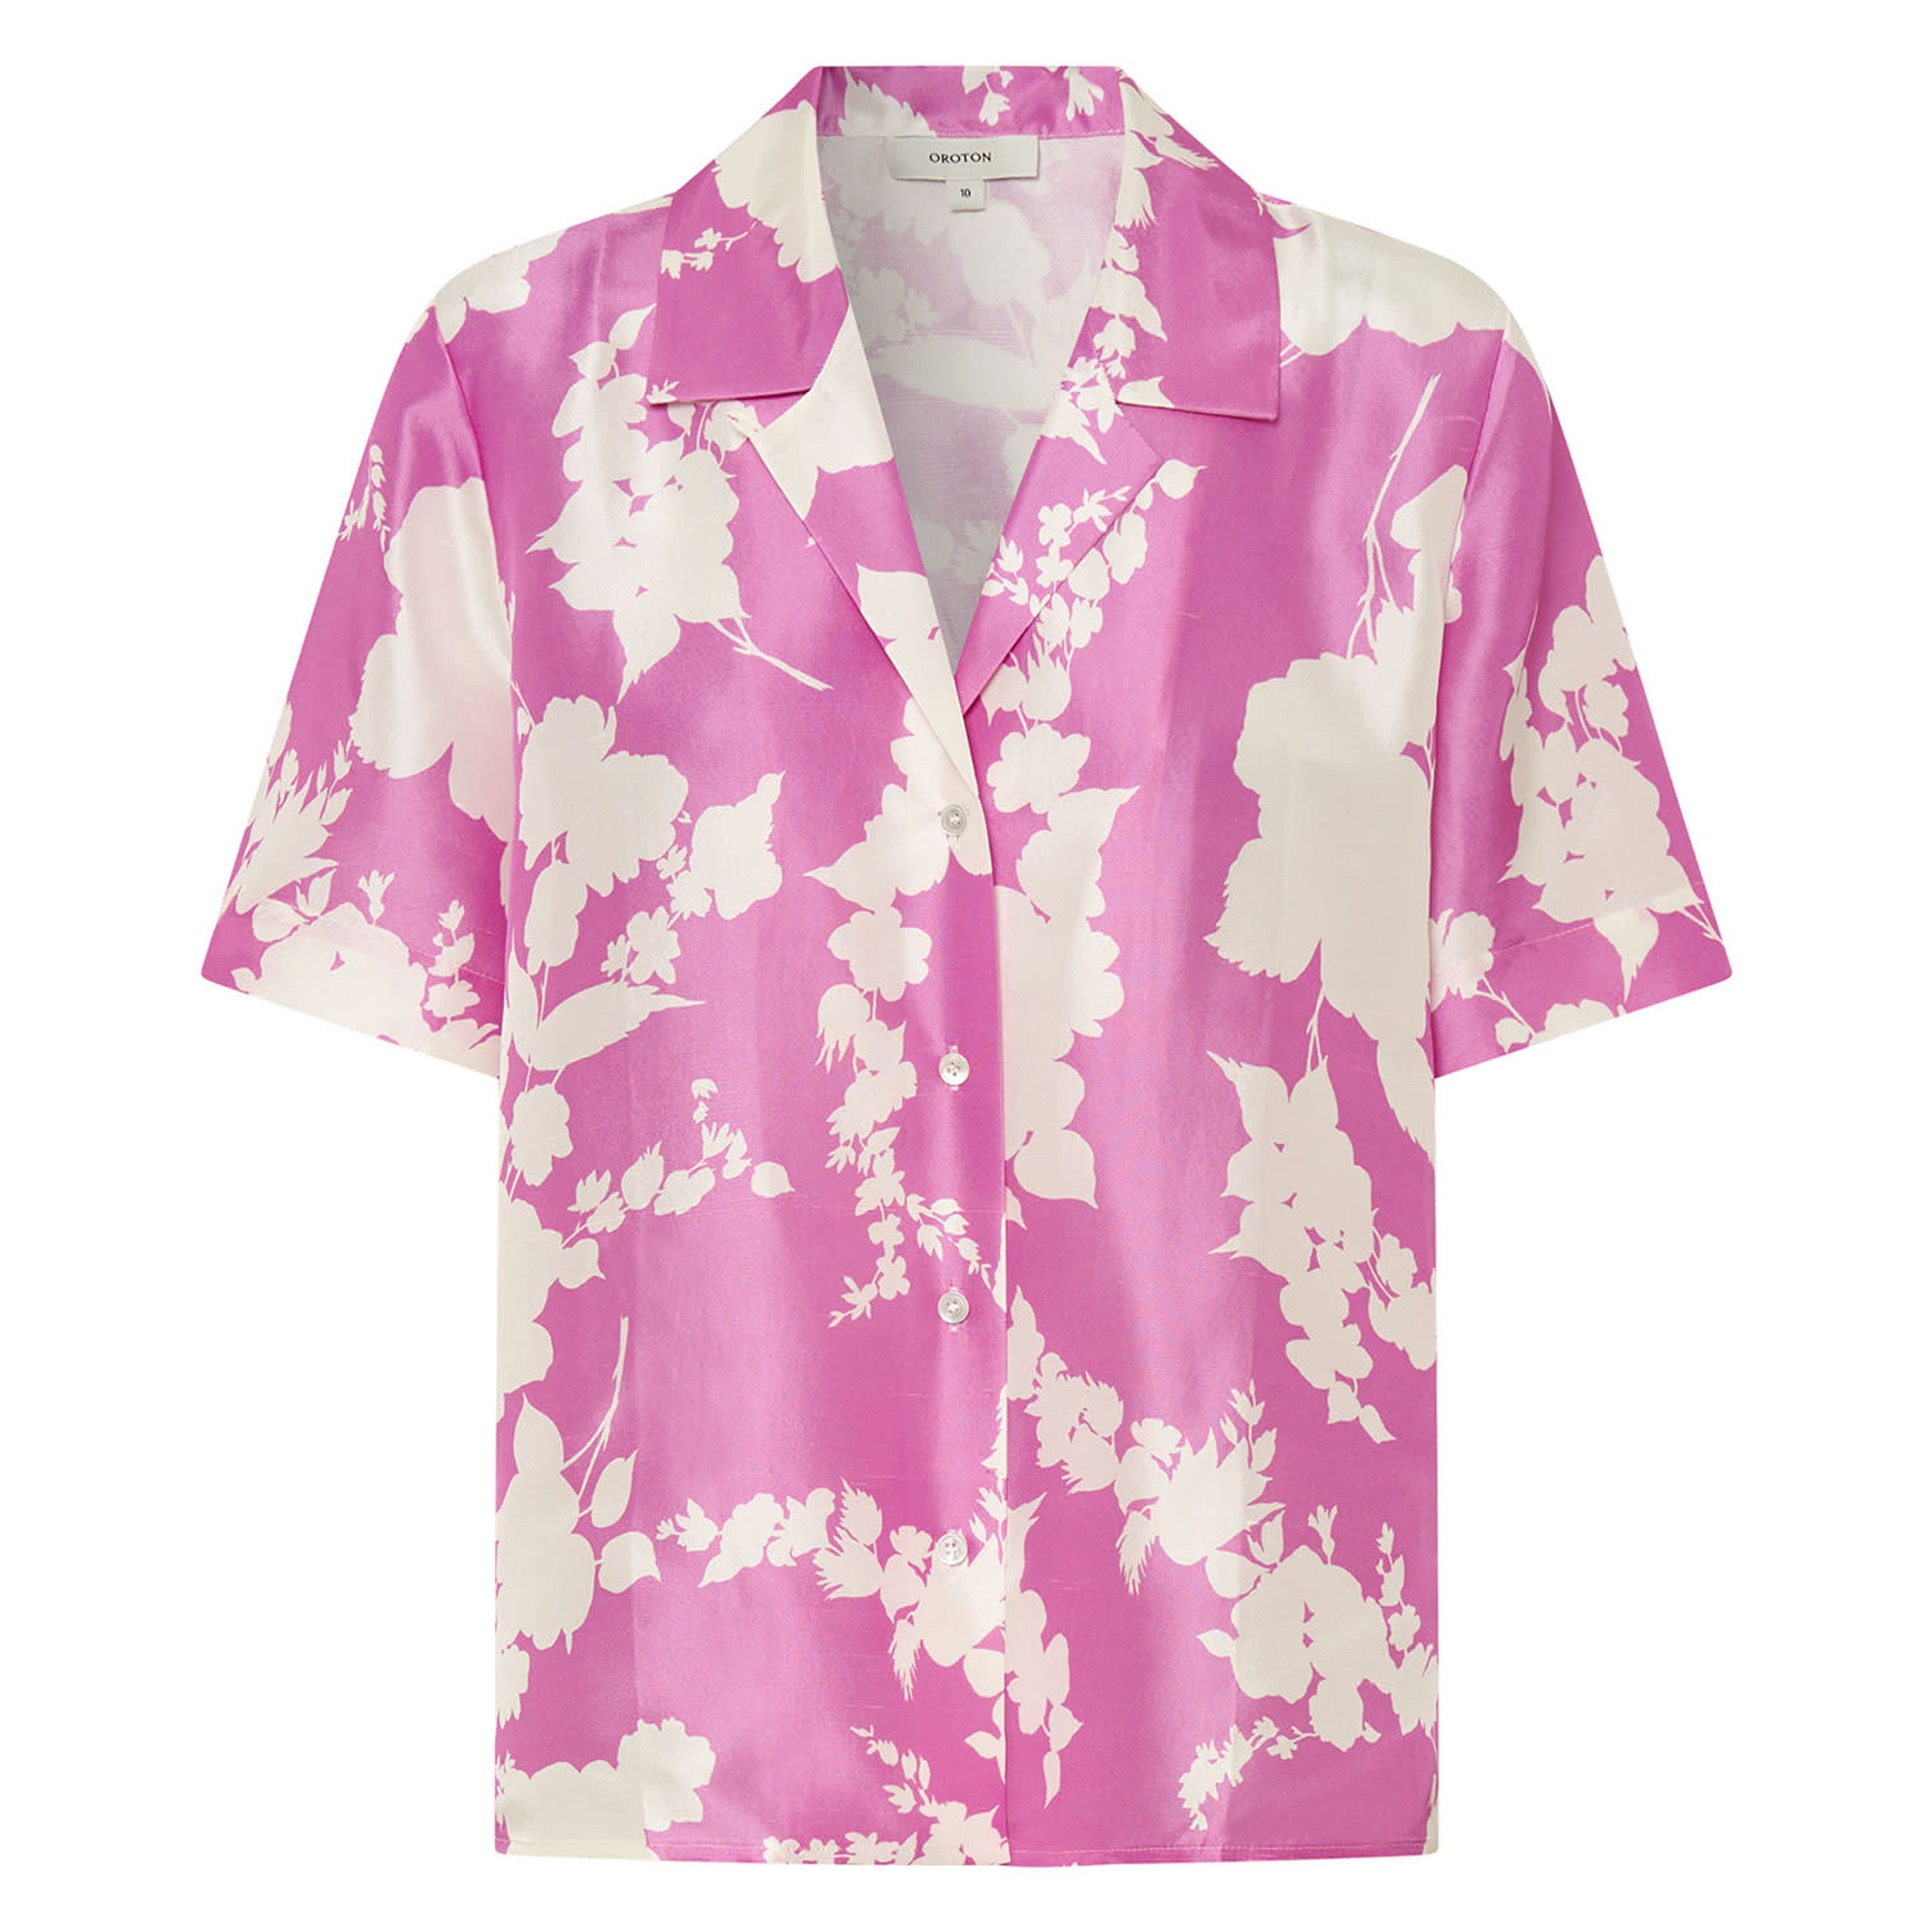 Silhouette Print Short Sleeve Camp Shirt - Carmine Pink | Oroton | Oroton